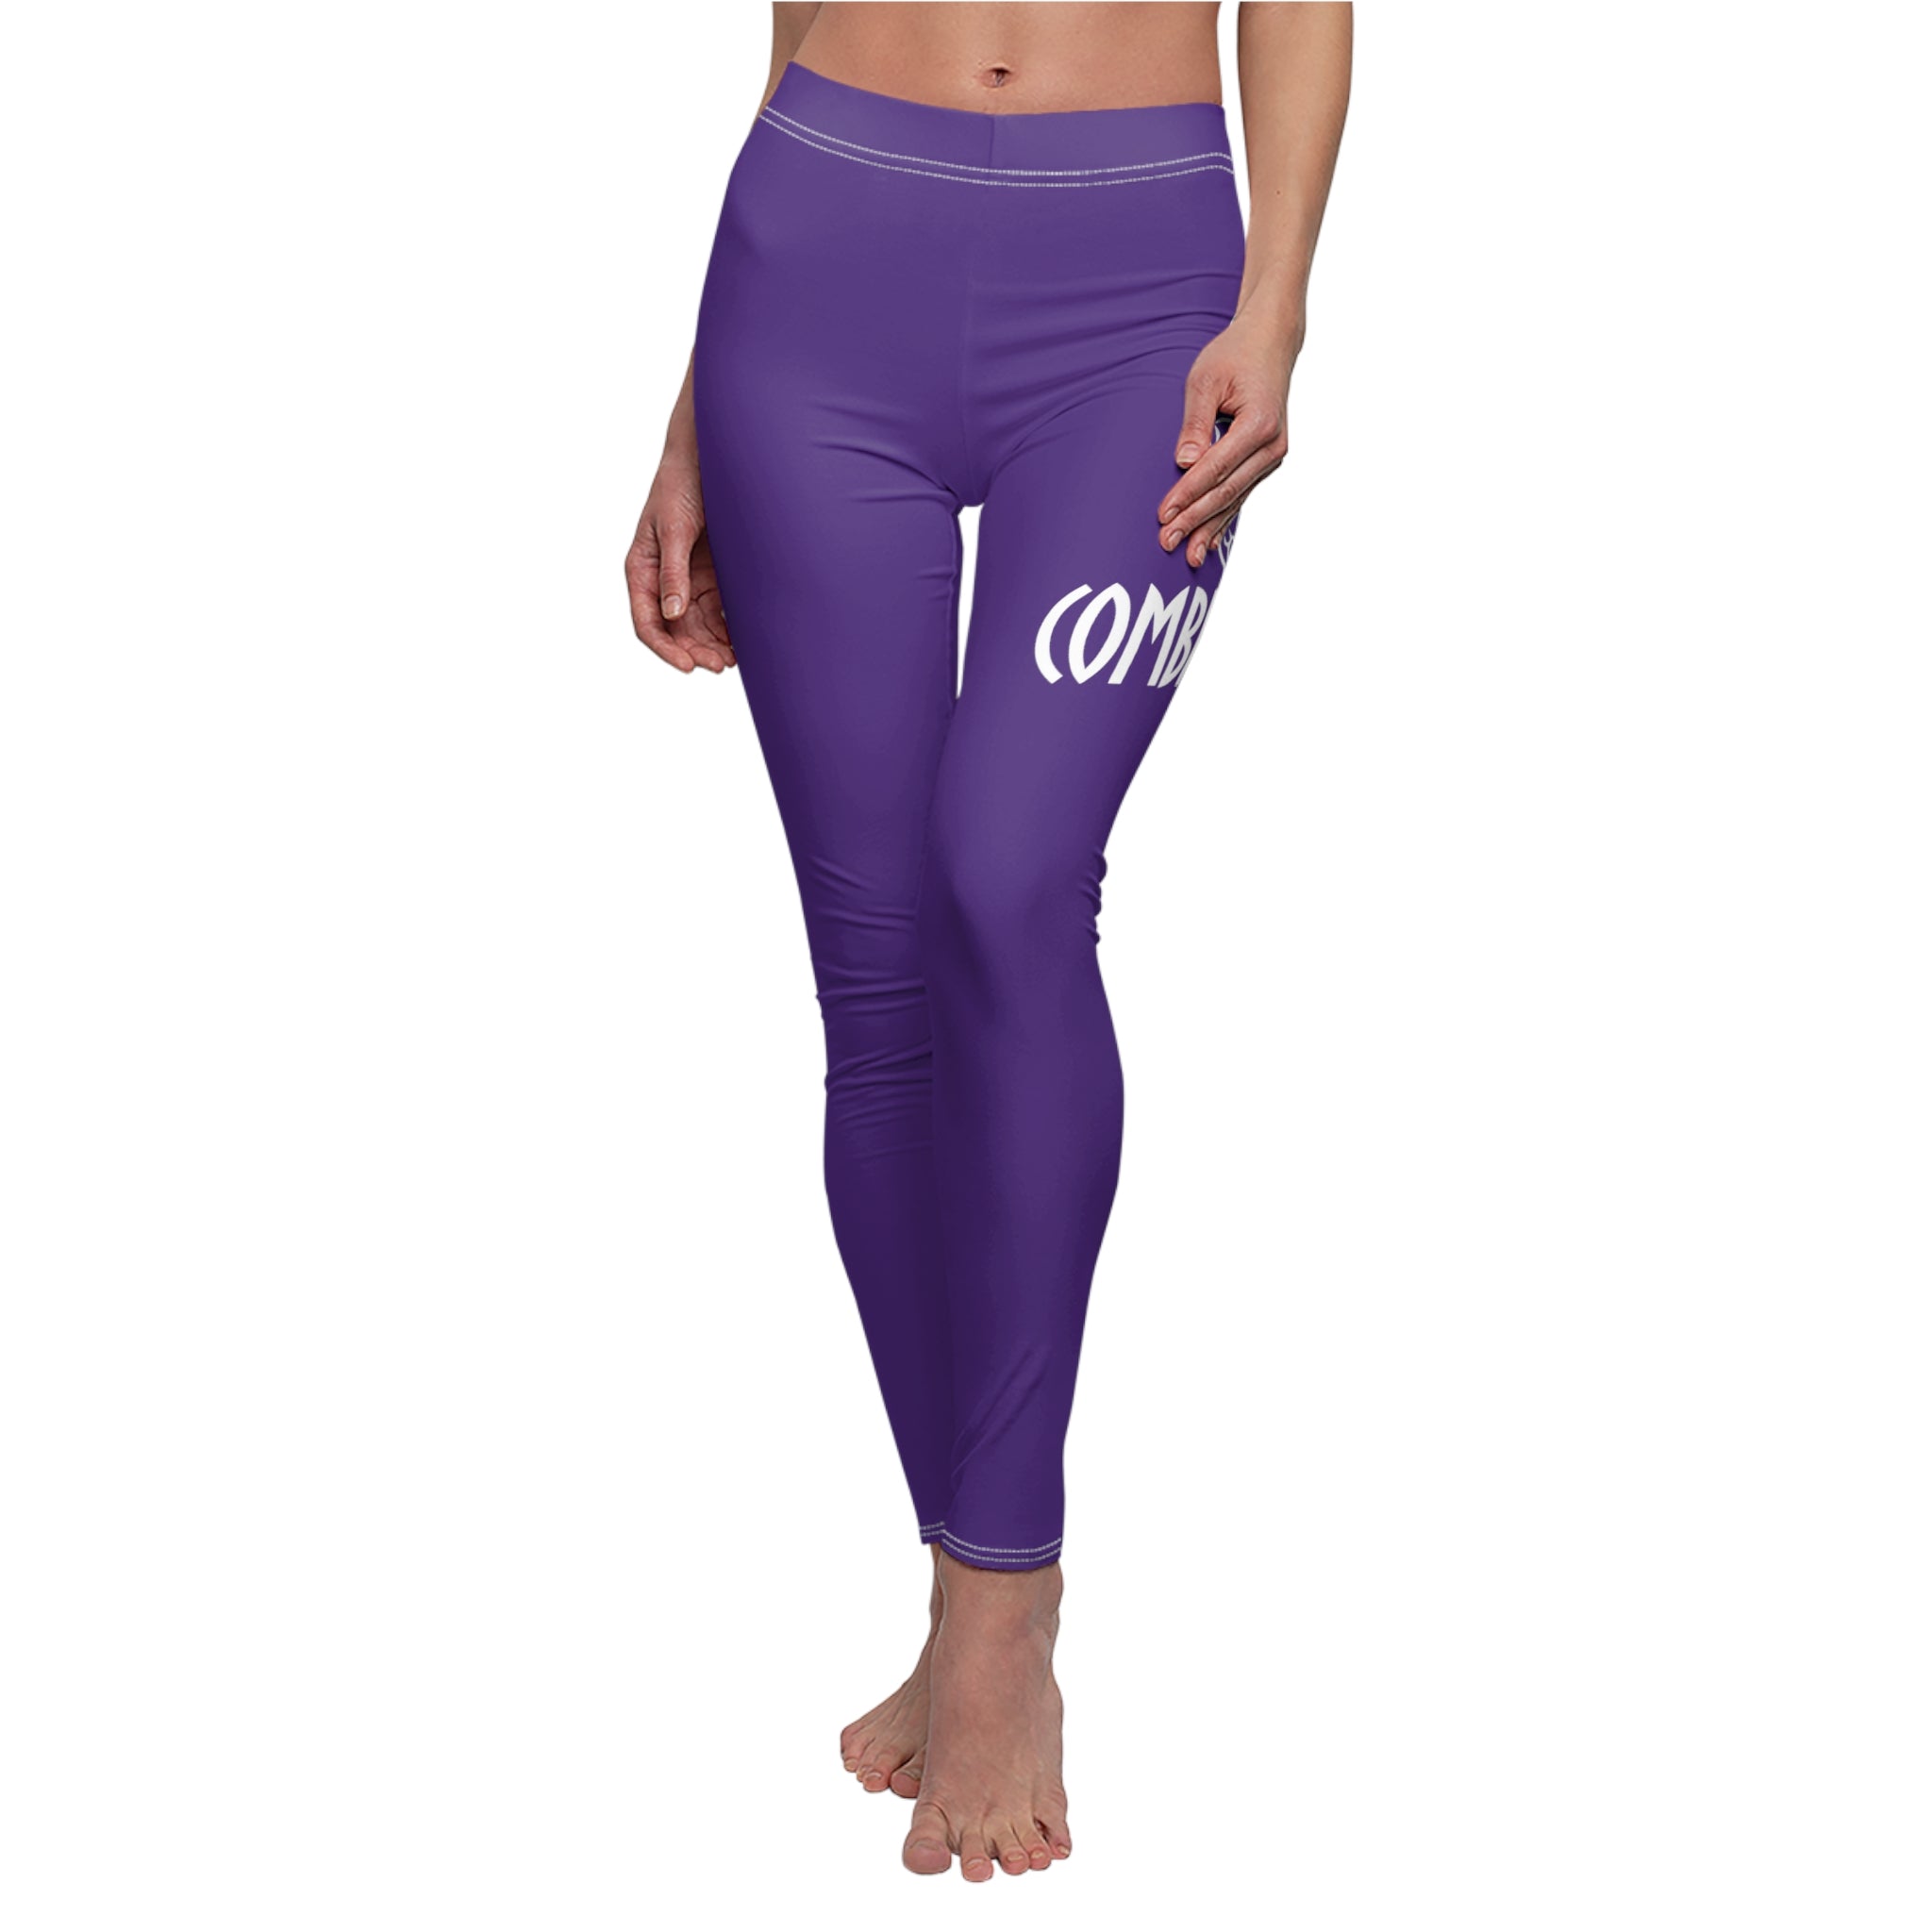 CombinedMinds Women's Cut & Sew Casual Leggings-Purple/White Logo